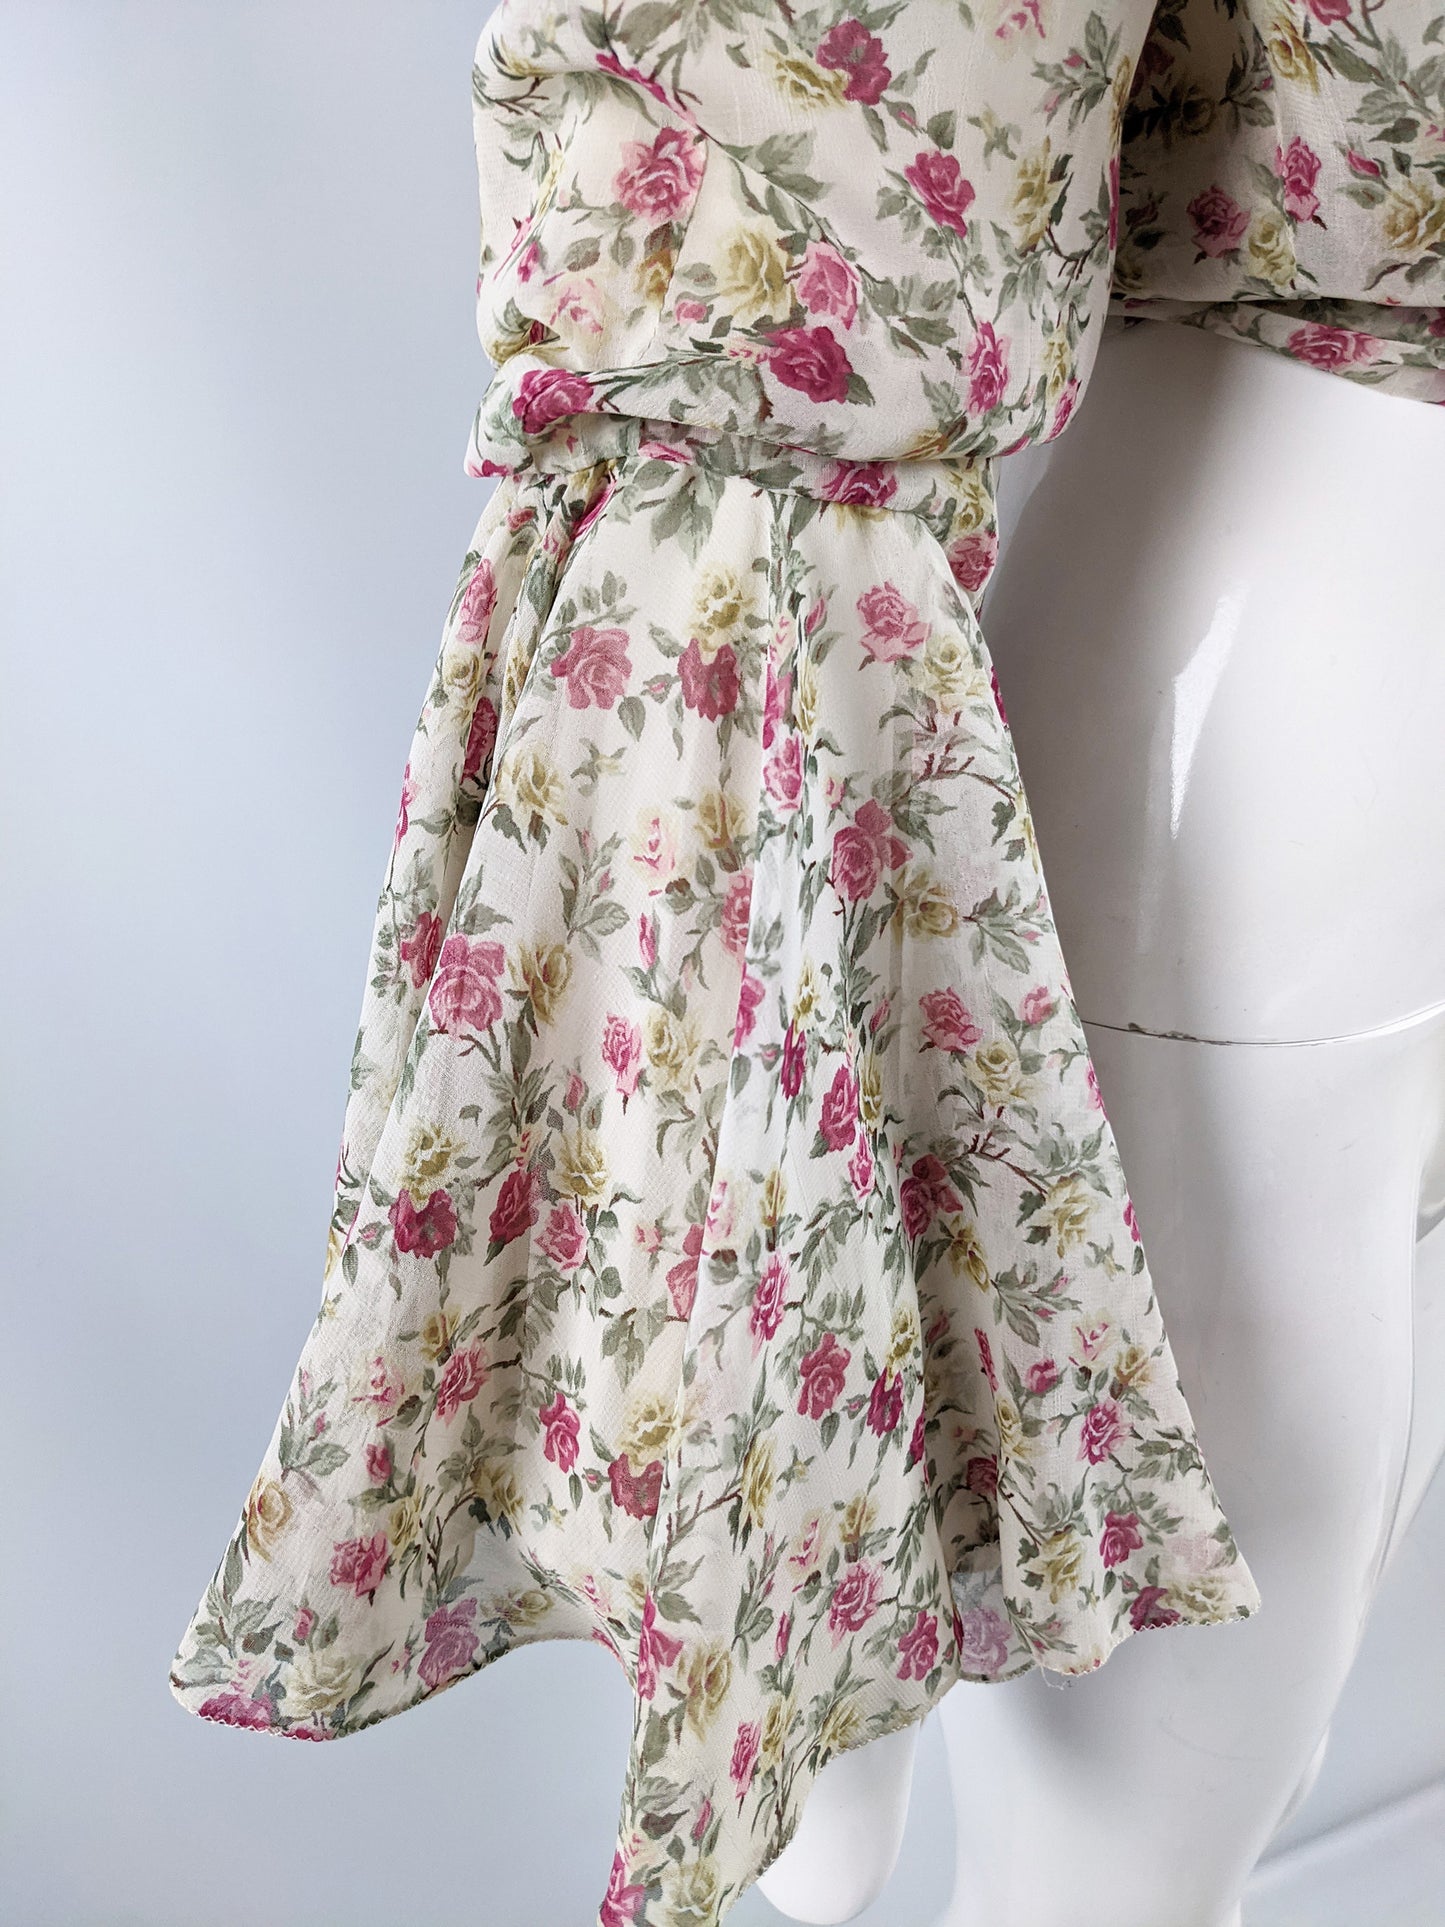 Vintage Romantic Floral Print Chiffon Bell Sleeve Blouse, 1980s